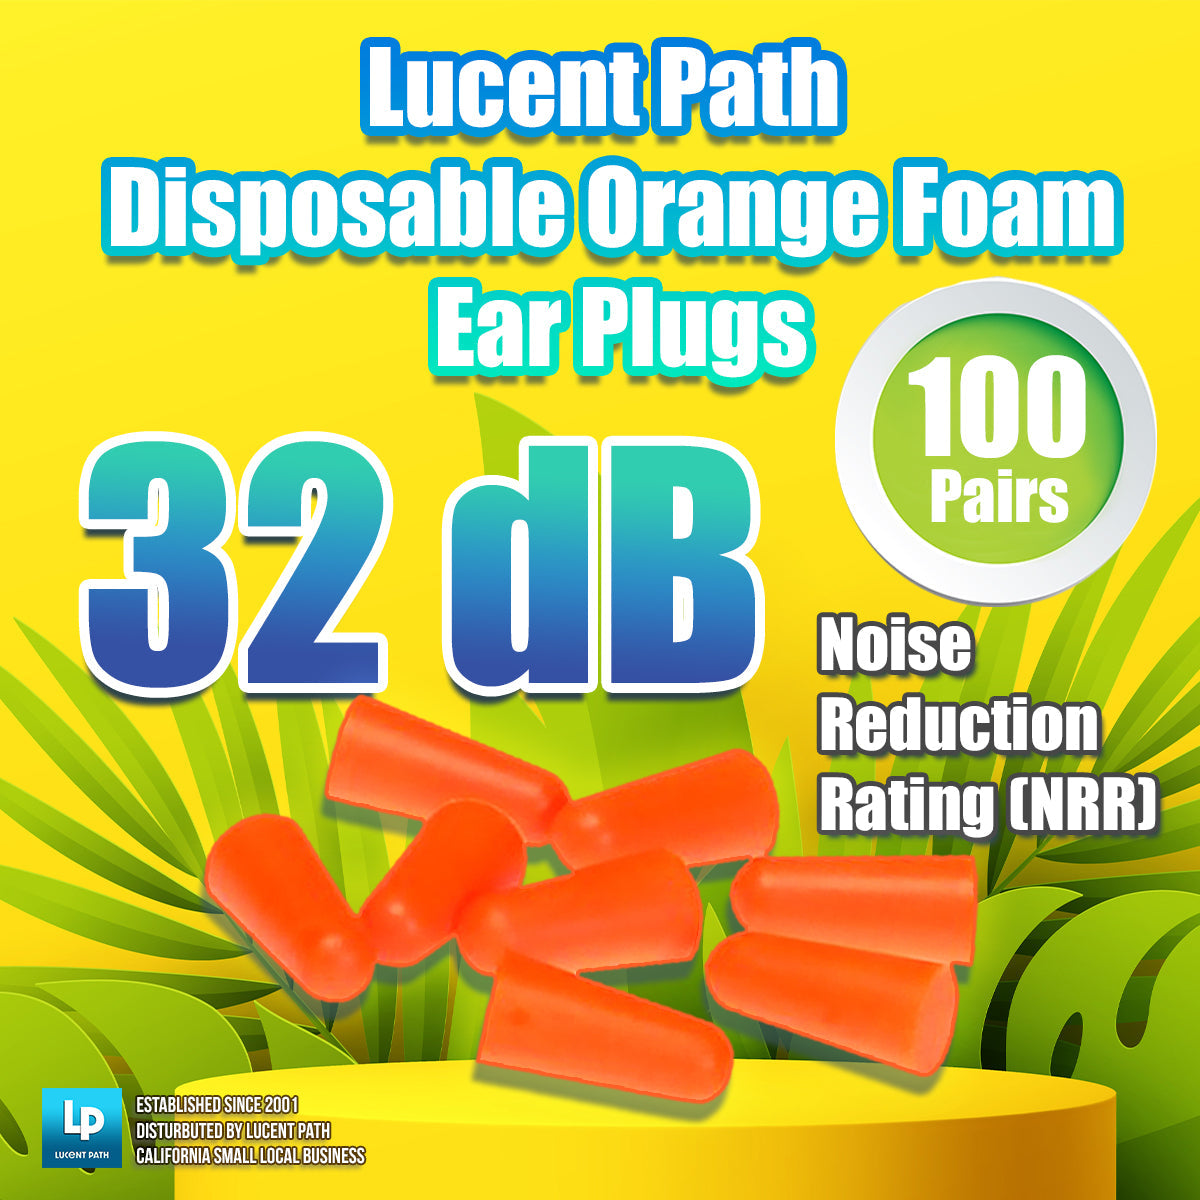  Lucent Path Disposable Orange Foam Ear Plugs - NRR 32dB